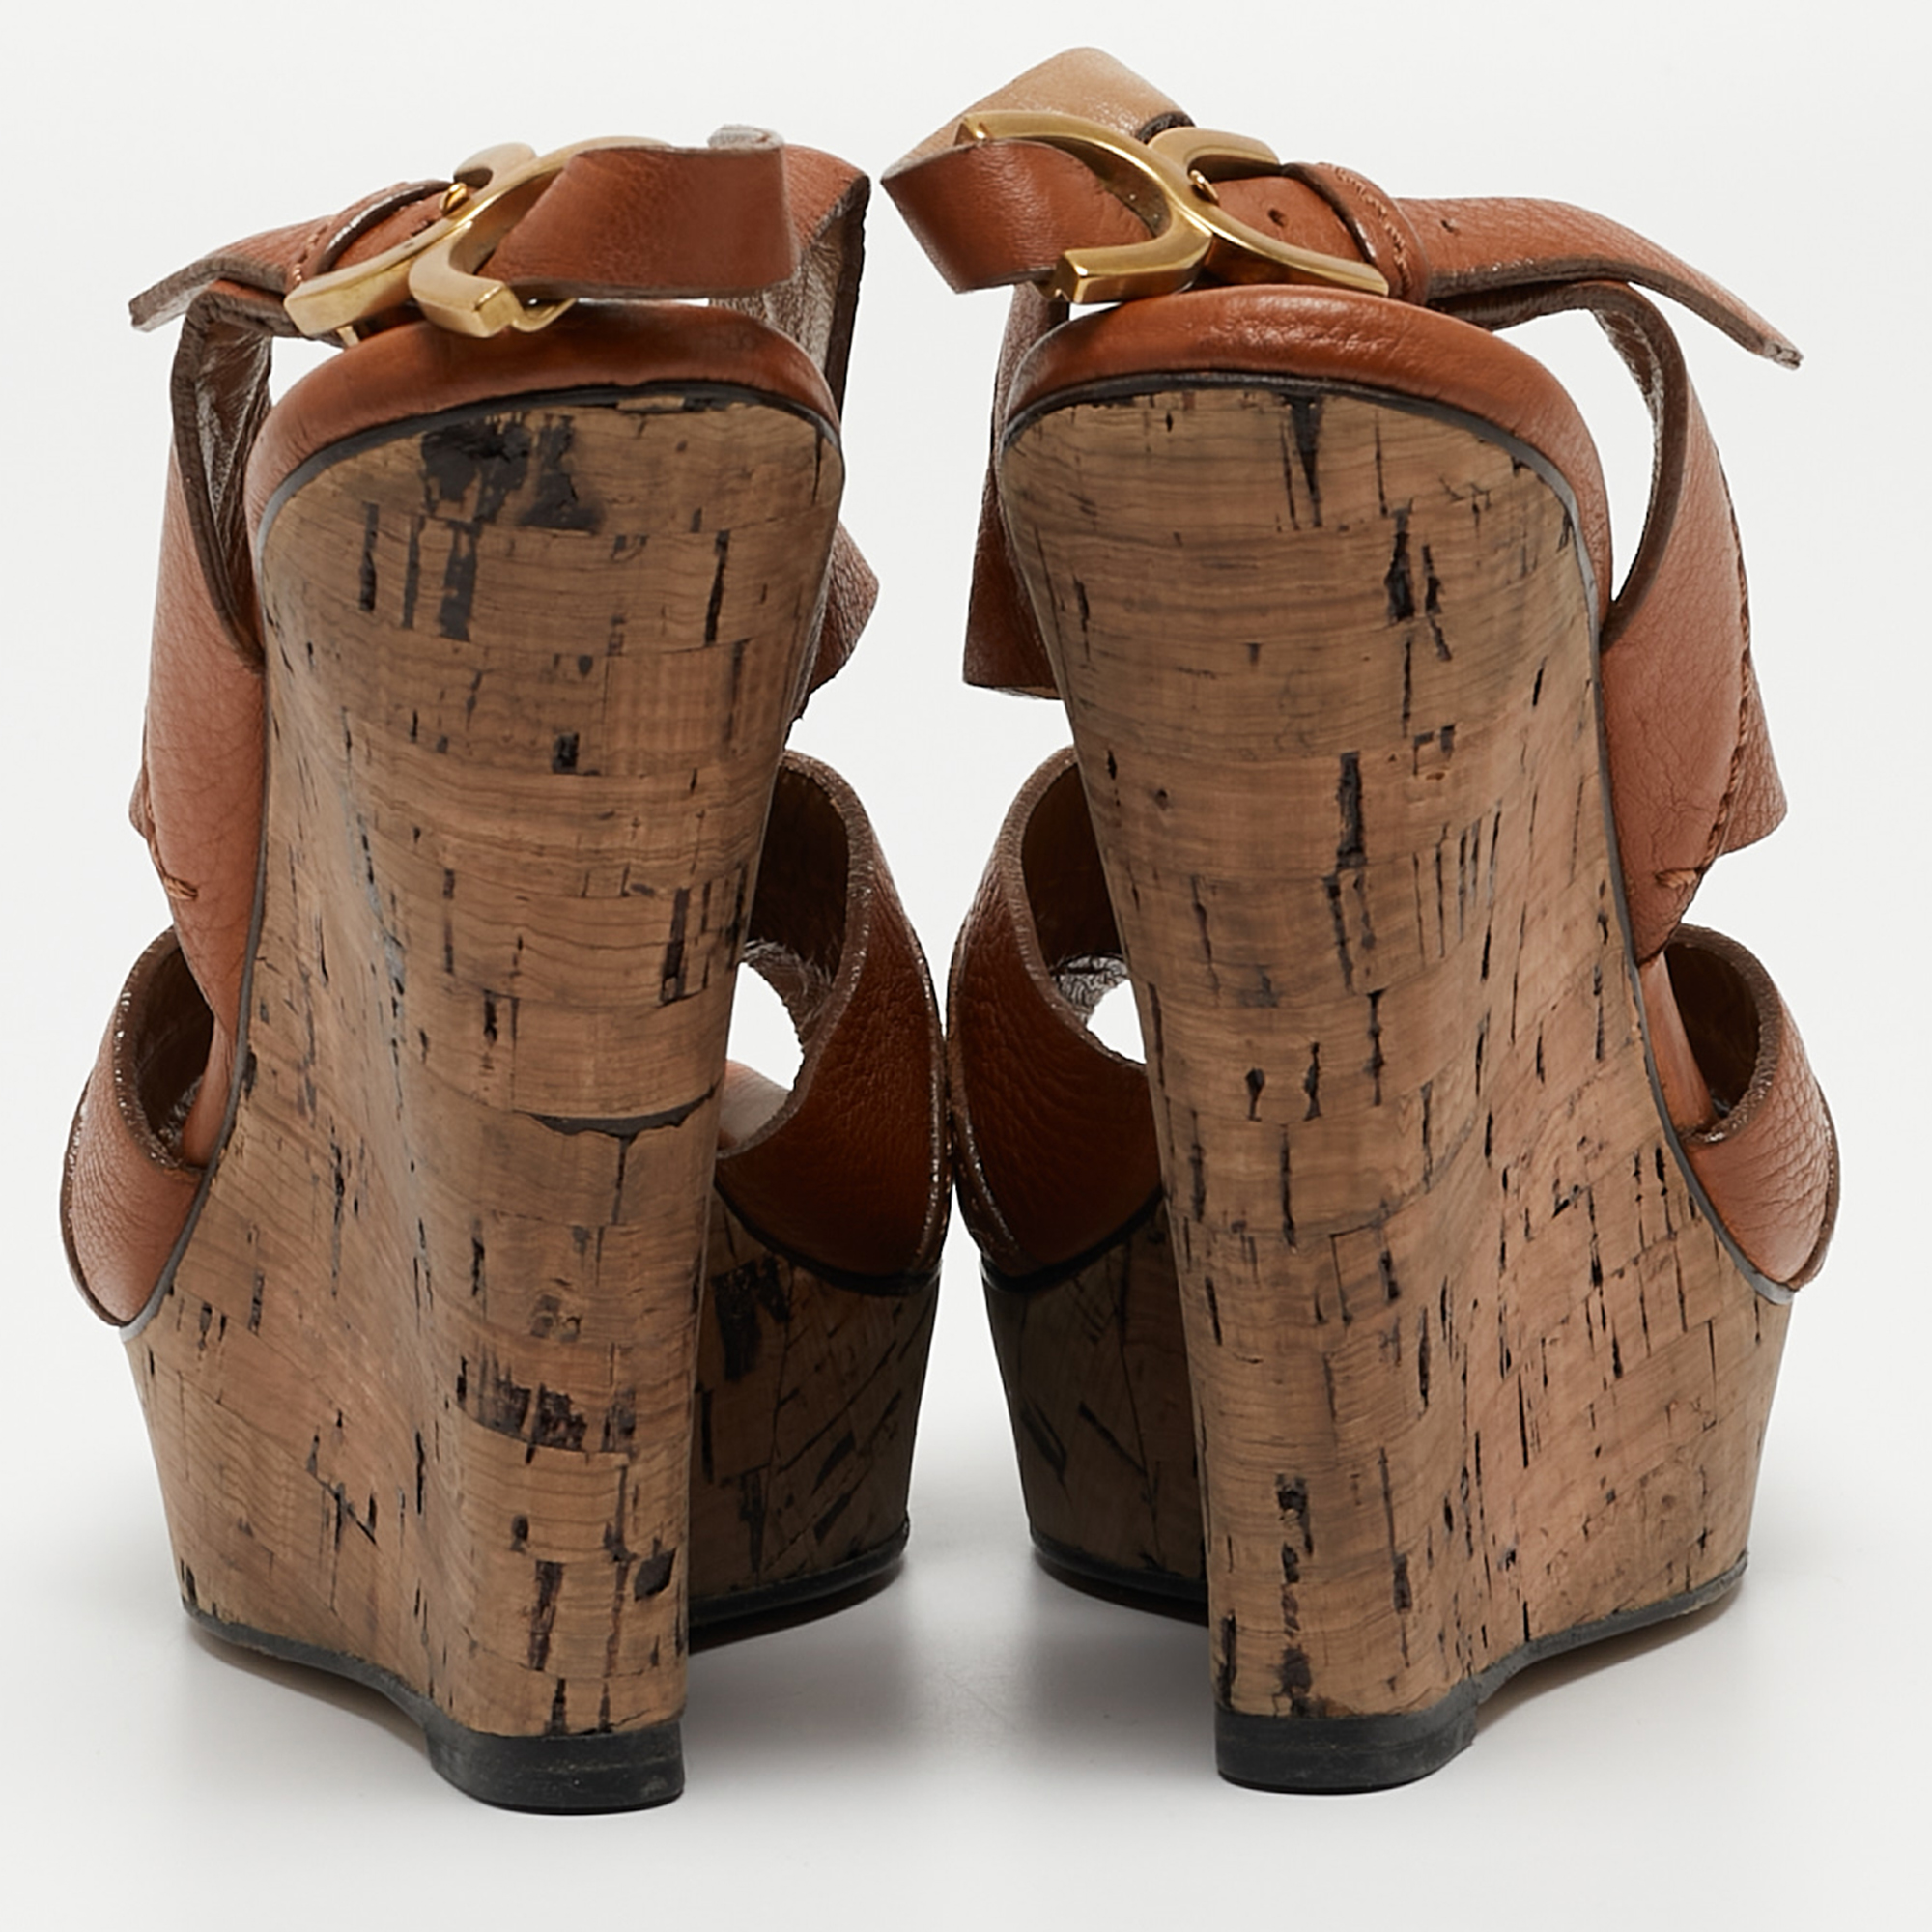 Chloe Brown Leather Cork Wedge Slingback Sandals Size 38